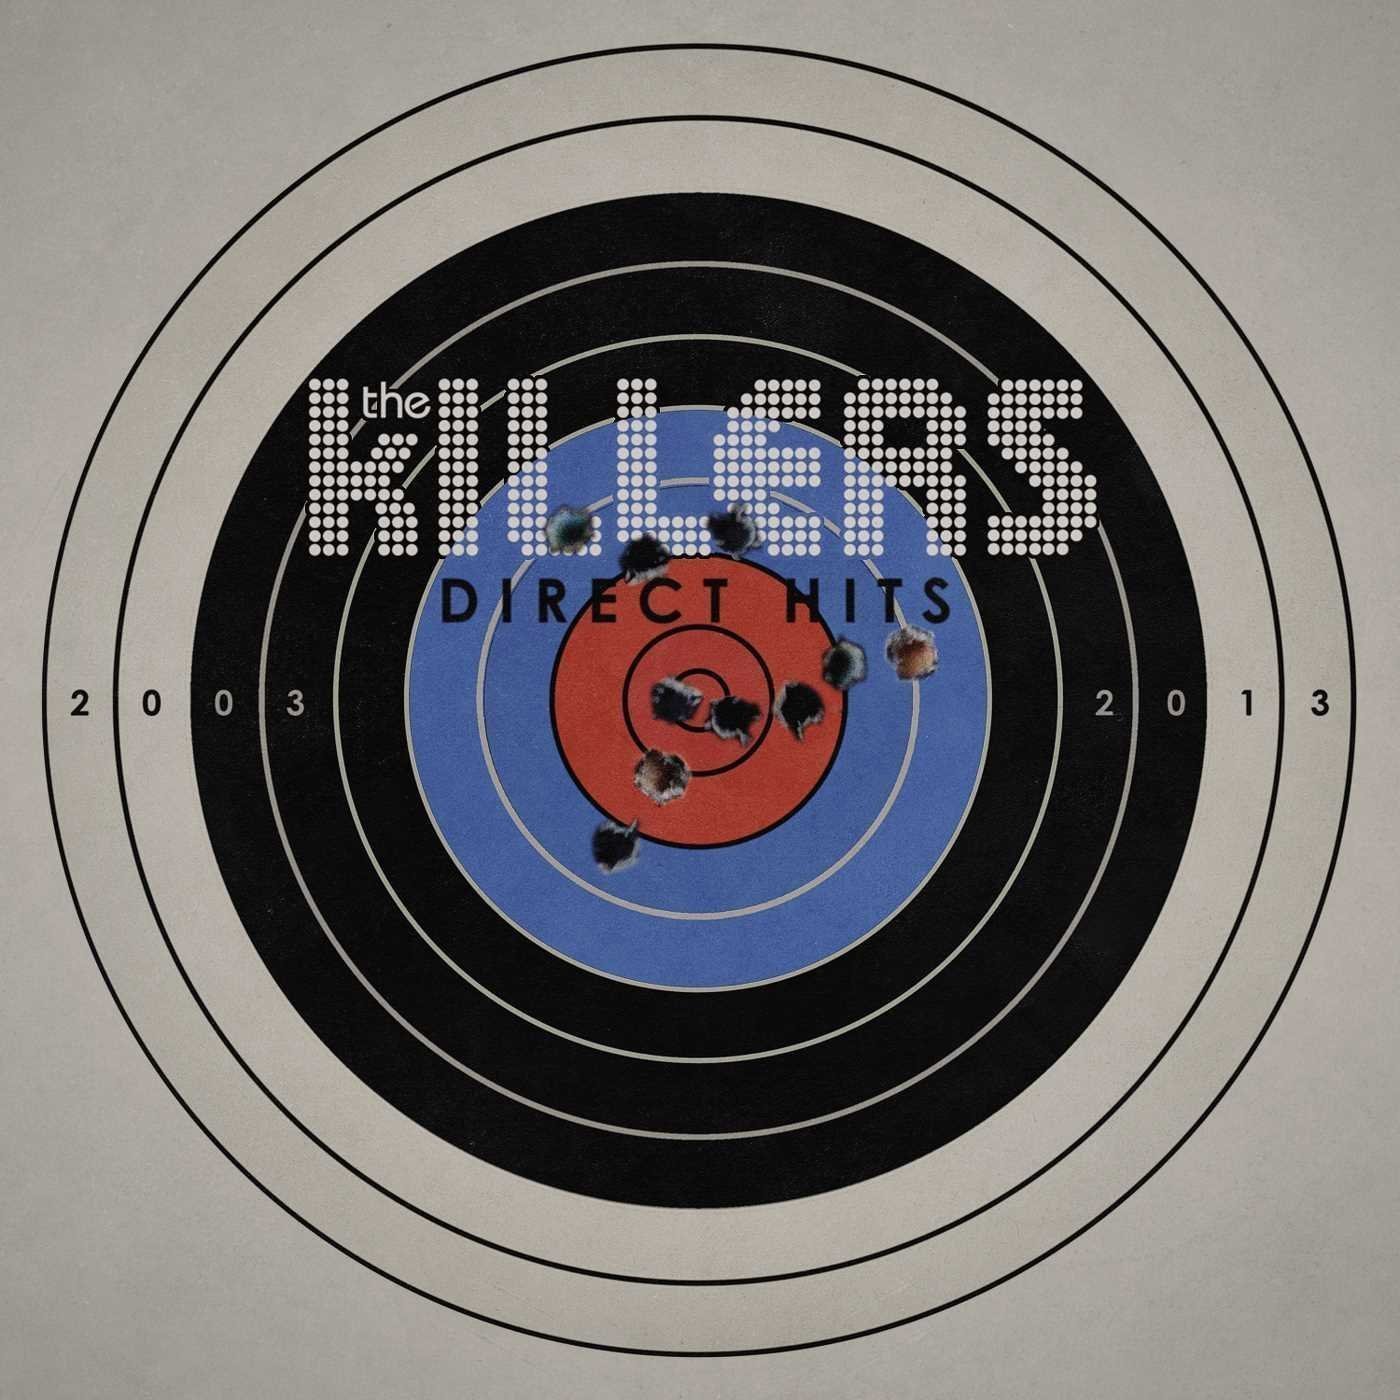 Disco de vinil The Killers - Direct Hits (2 LP)